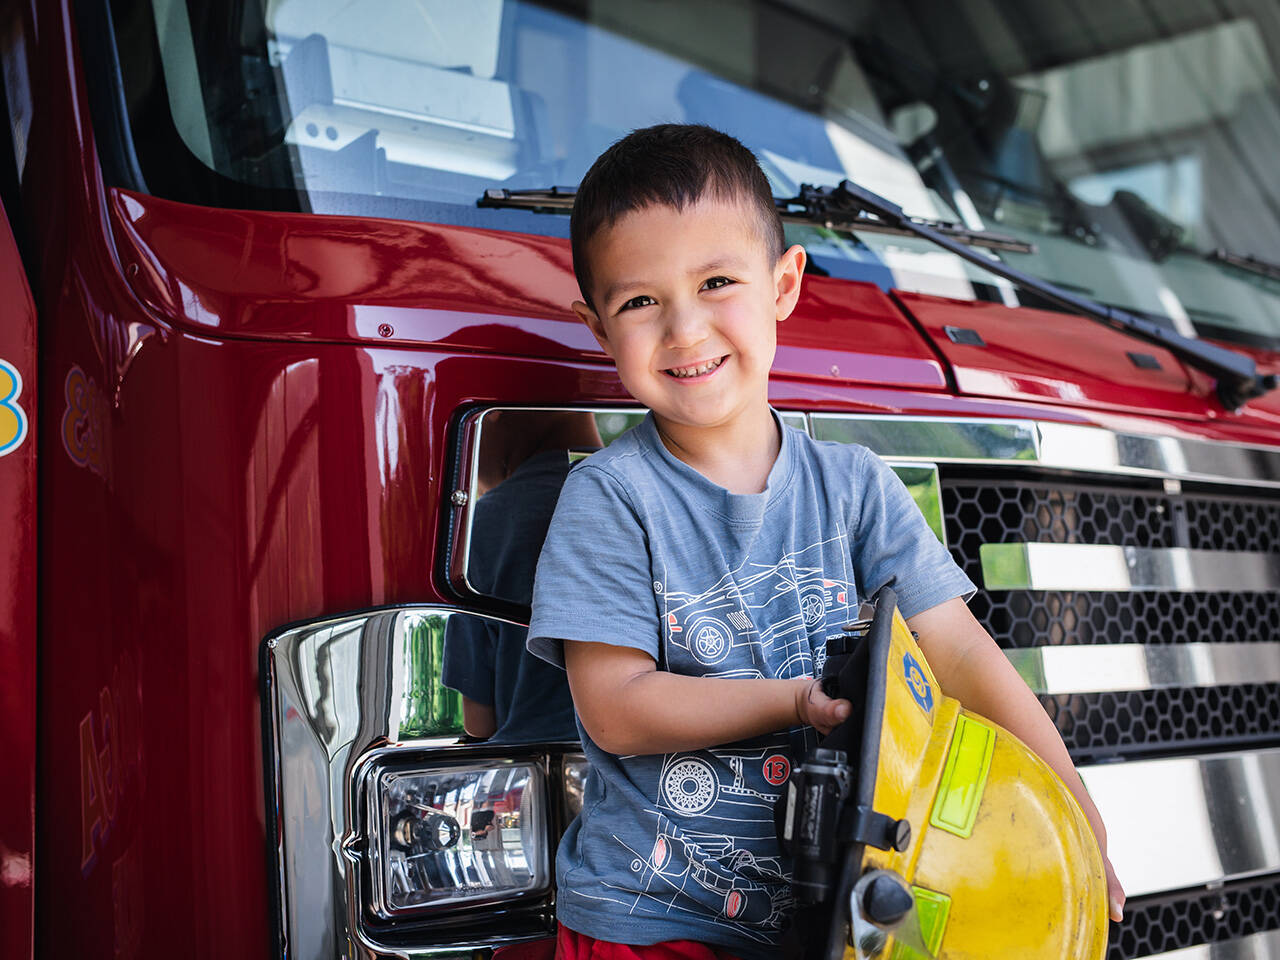 Little kid near fire truck